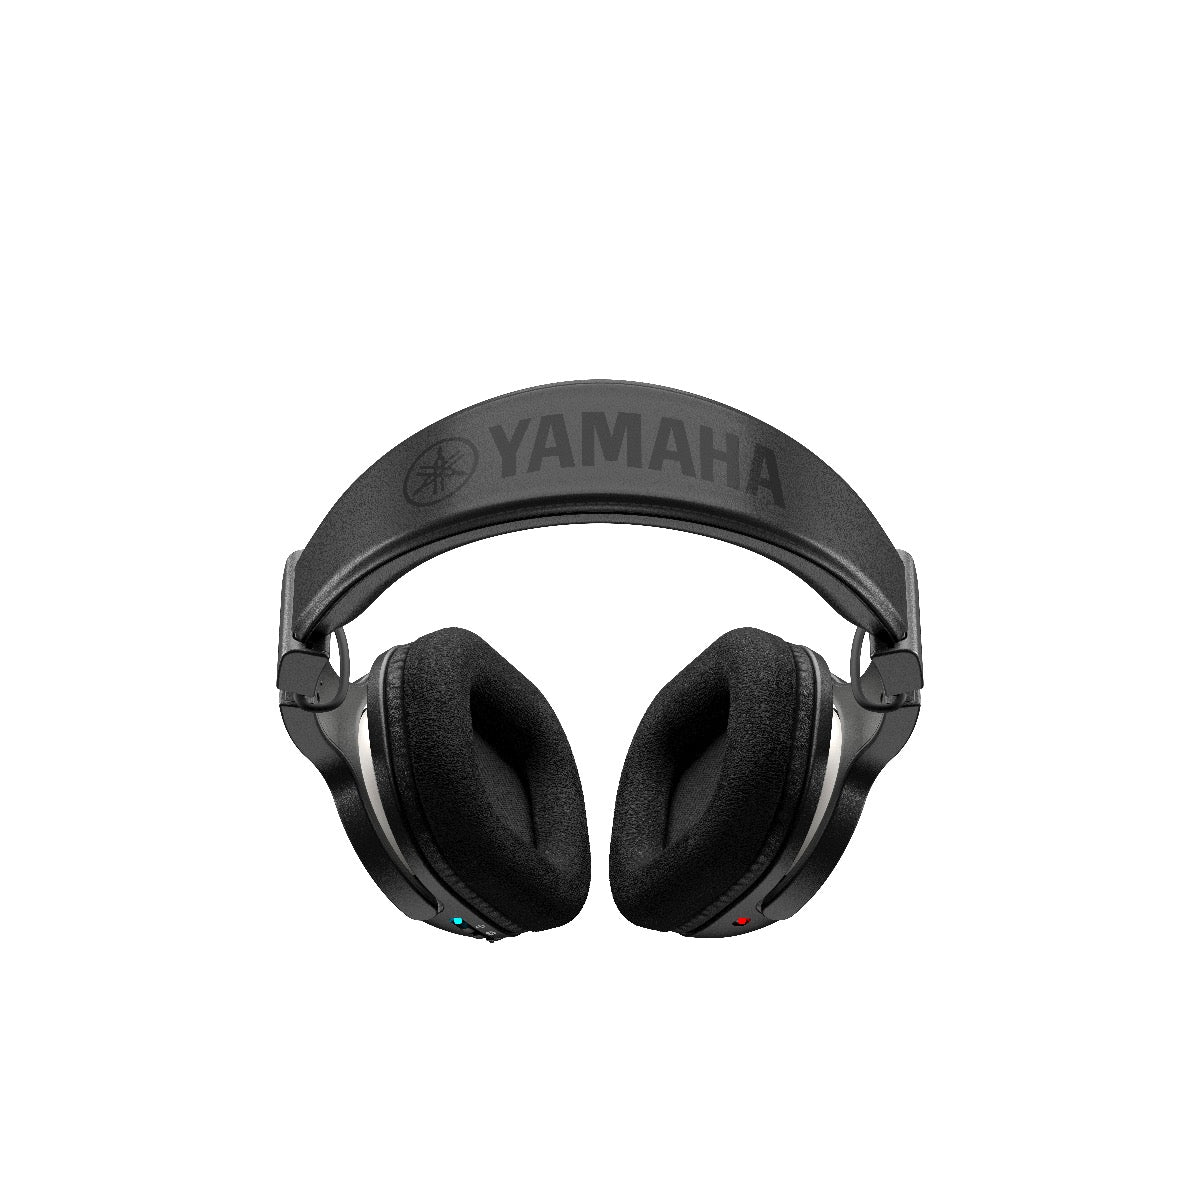 Yamaha YH-WL500 Wireless Headphones, View 5